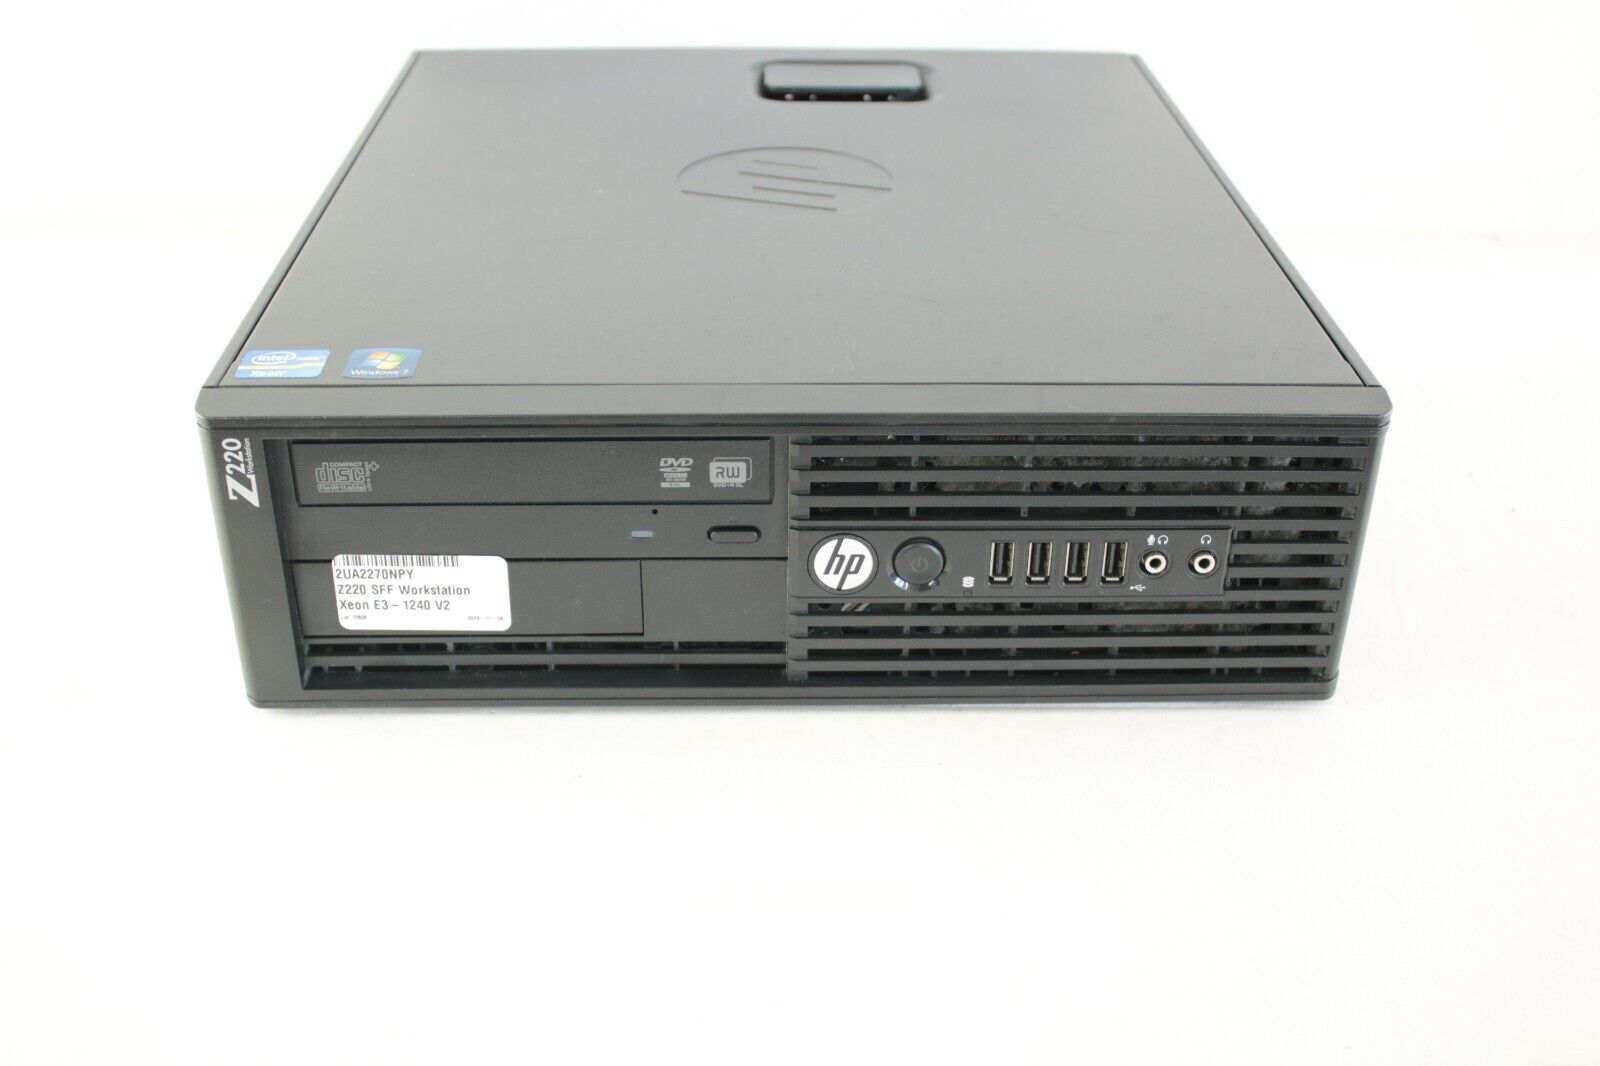 HP Workstation Z220 w/ Xeon E3-1240 V2 CPU @3.4GHz - 4GB RAM - No HDD/SSD or OS